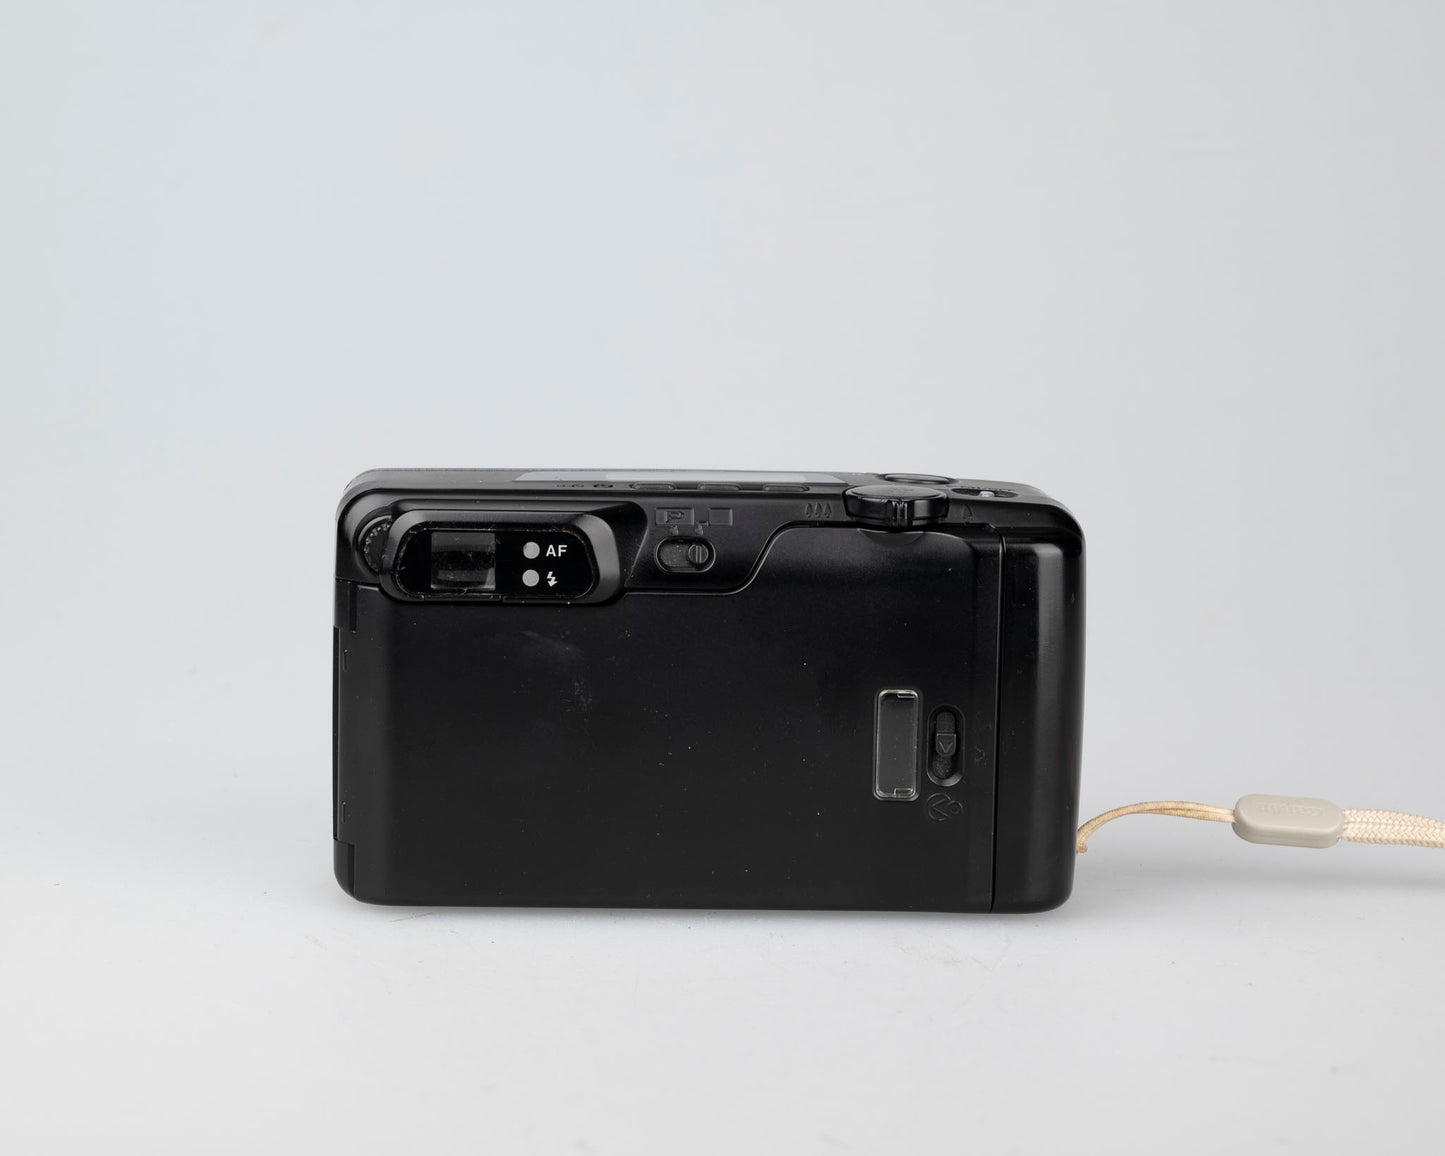 Pentax Espio 115M ultra-compact 35mm camera (serial 8222421)